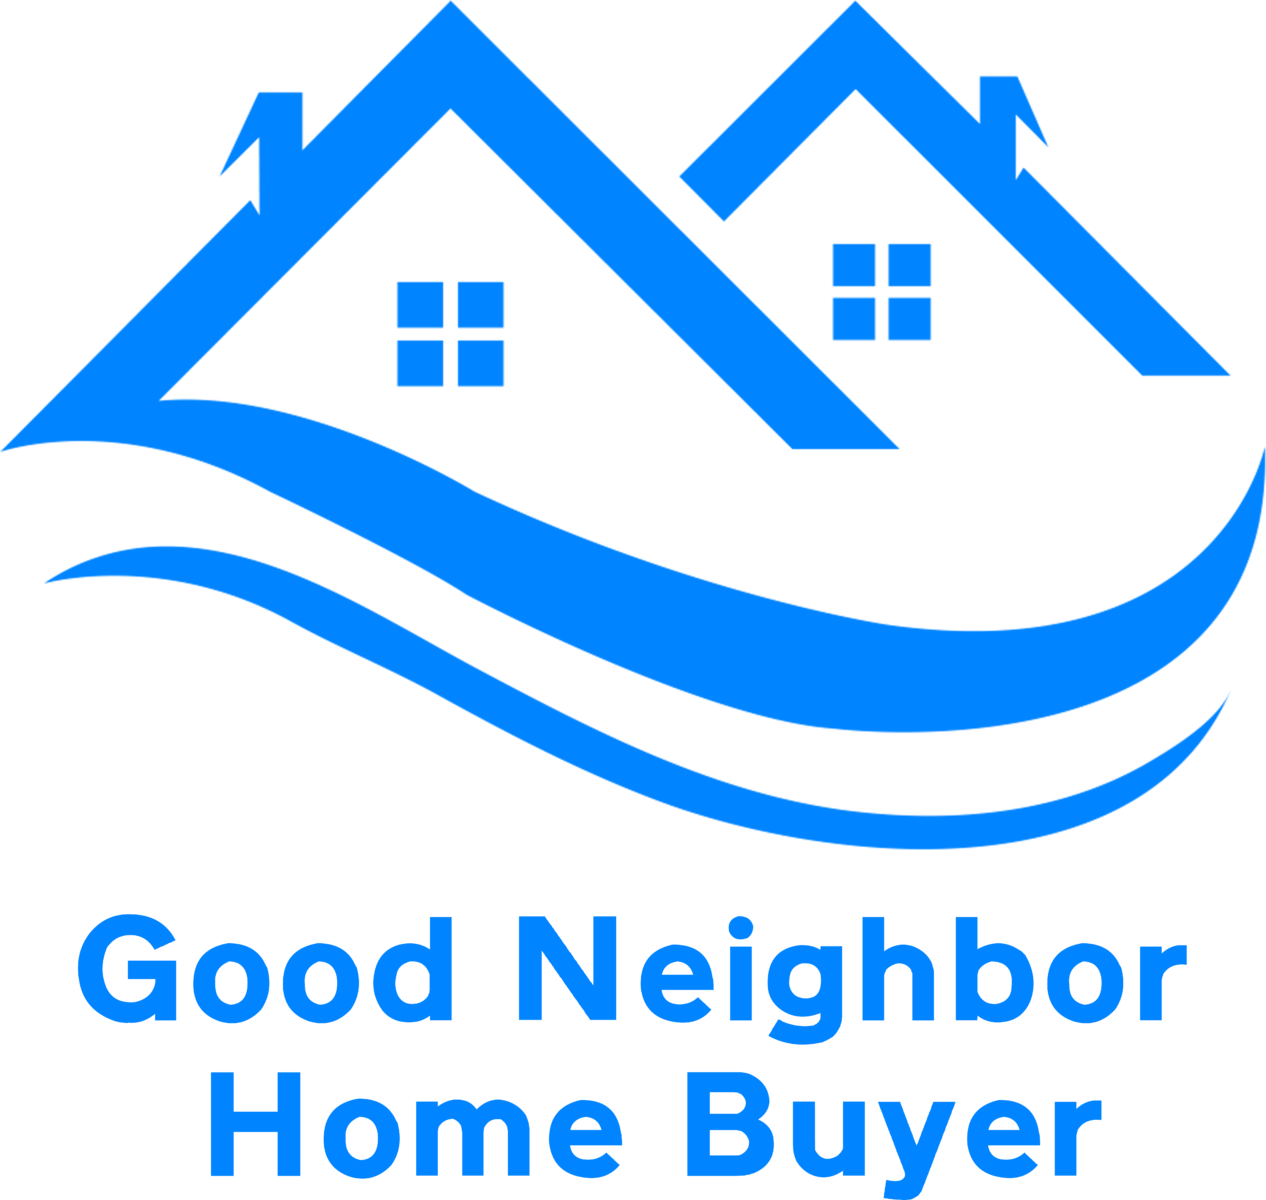 A Good Neighbor Home Buyer logo